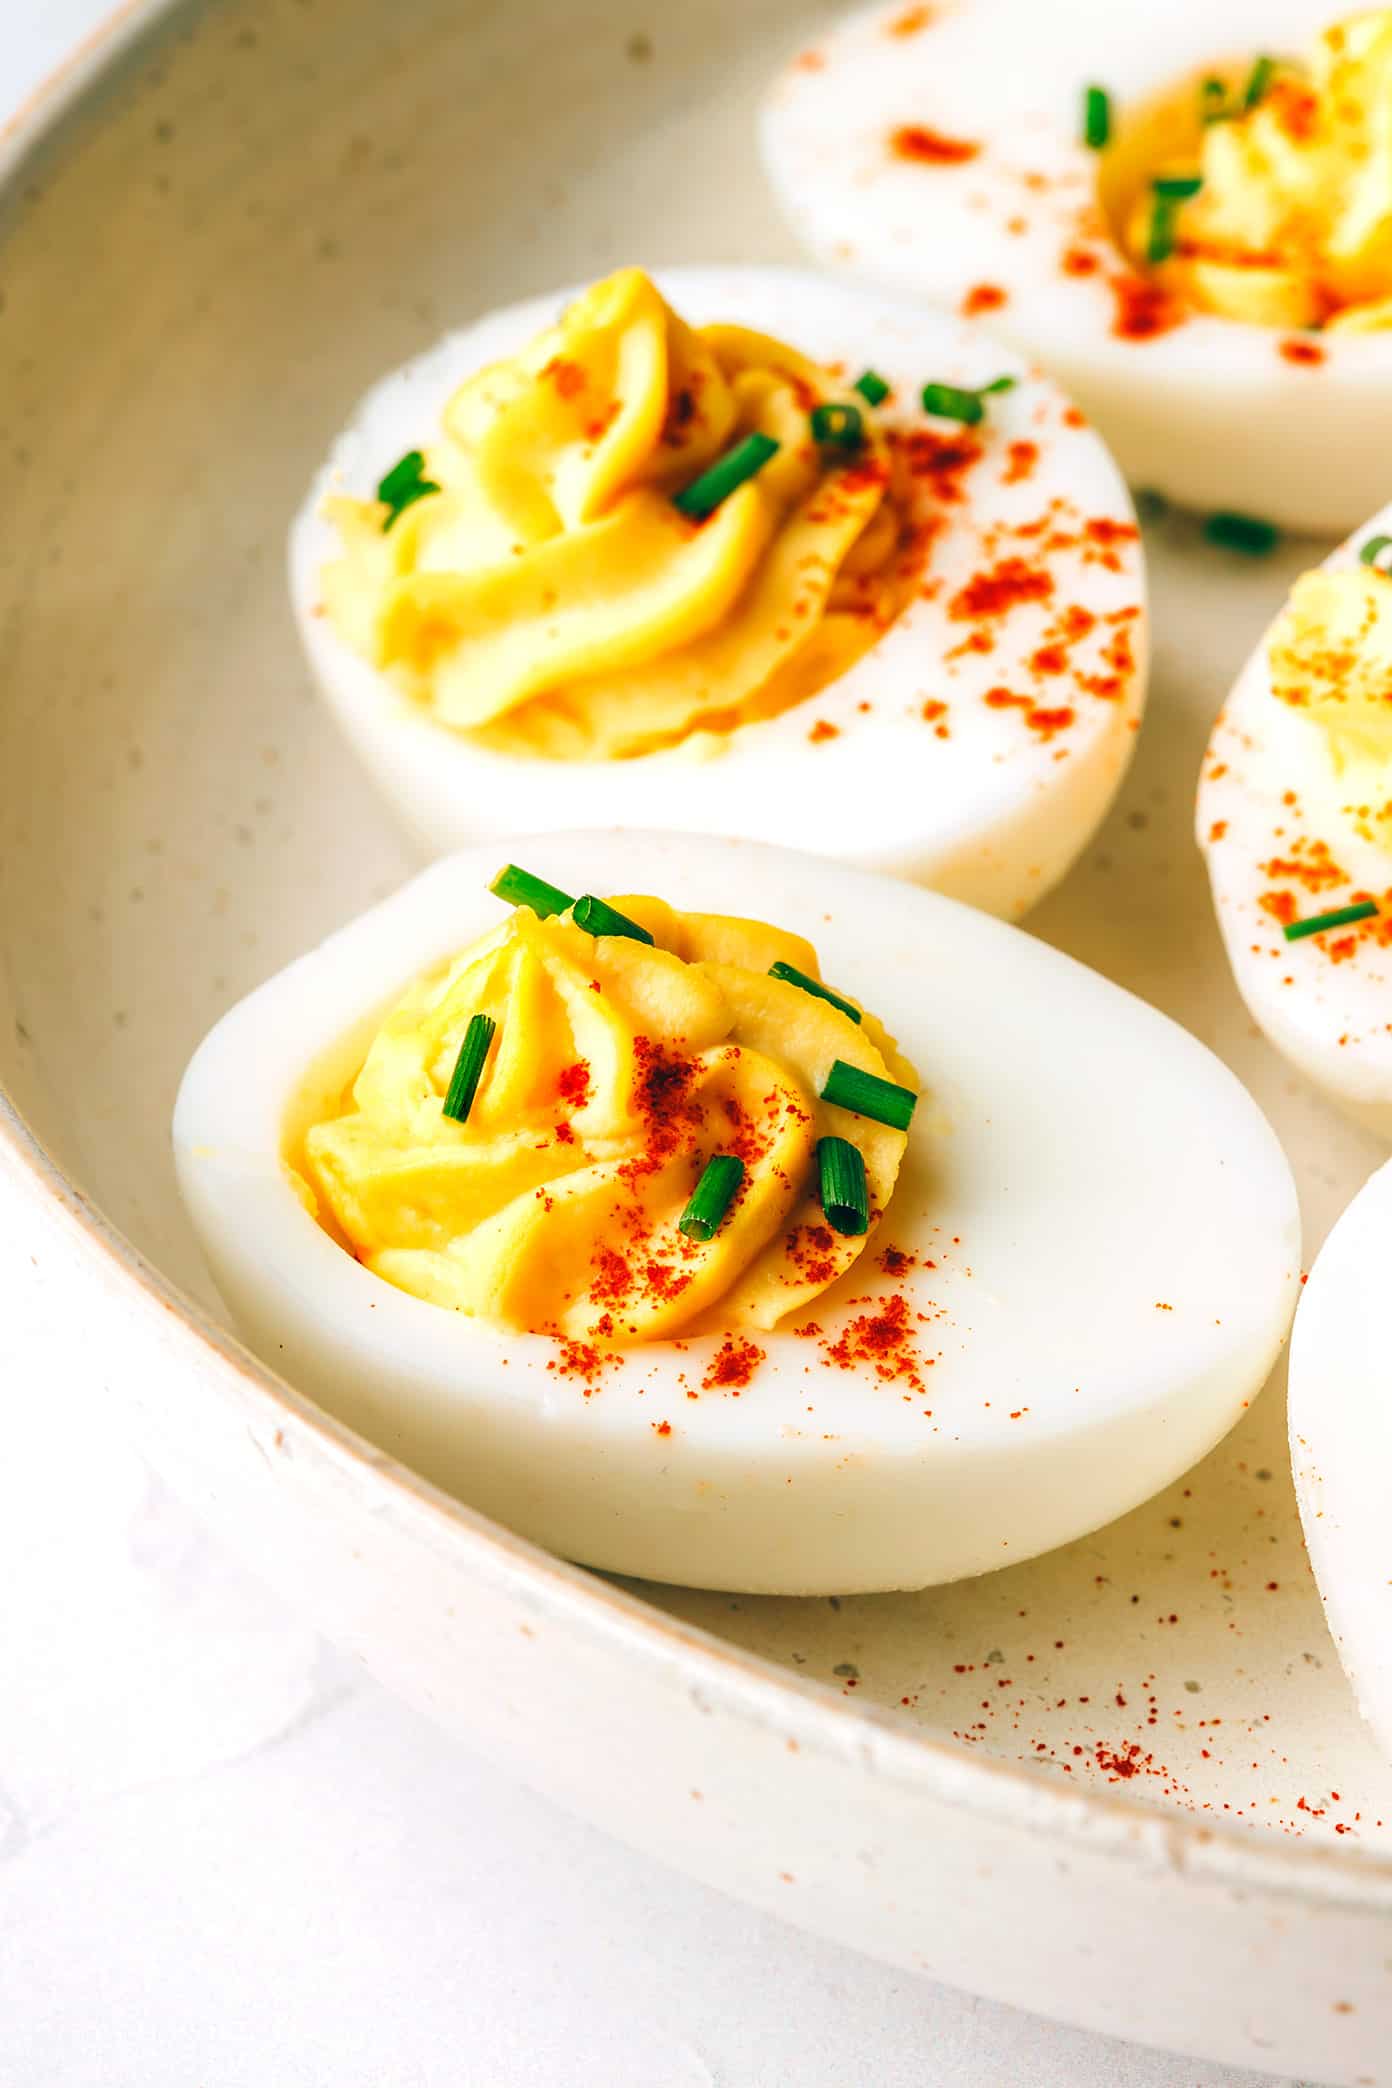 BEST Deviled Eggs Recipe - How to Make Deviled Eggs